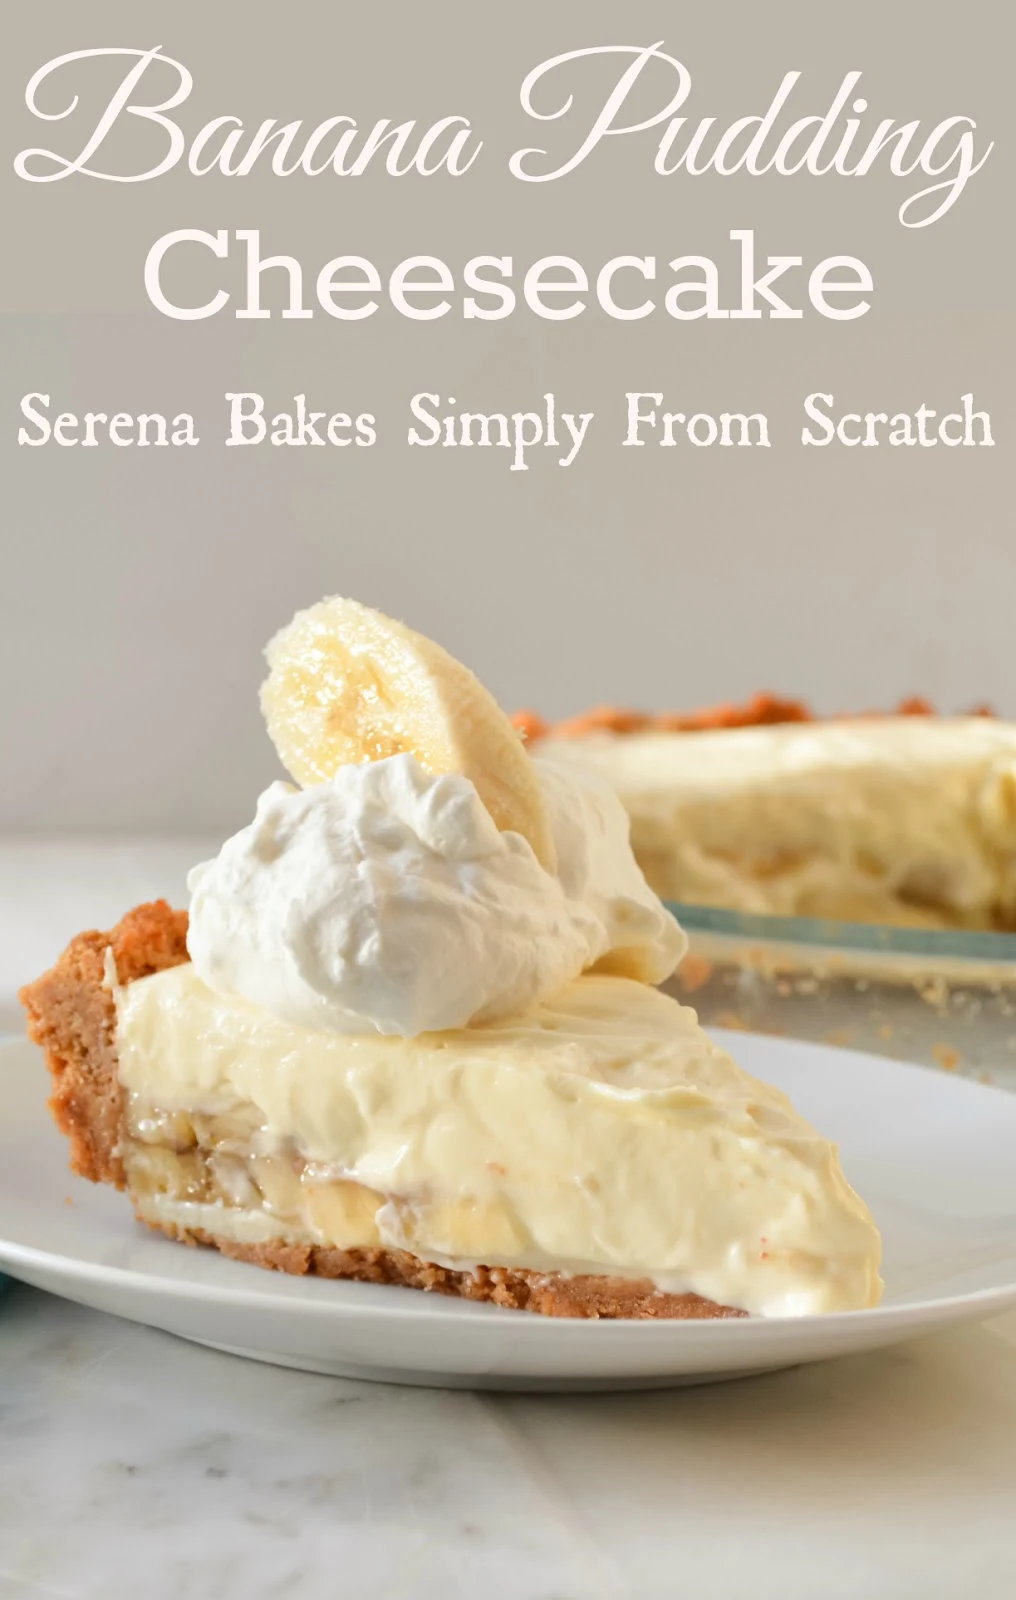 https://www.serenabakessimplyfromscratch.com/2014/06/banana-pudding-cheesecake-sundaysupper.html